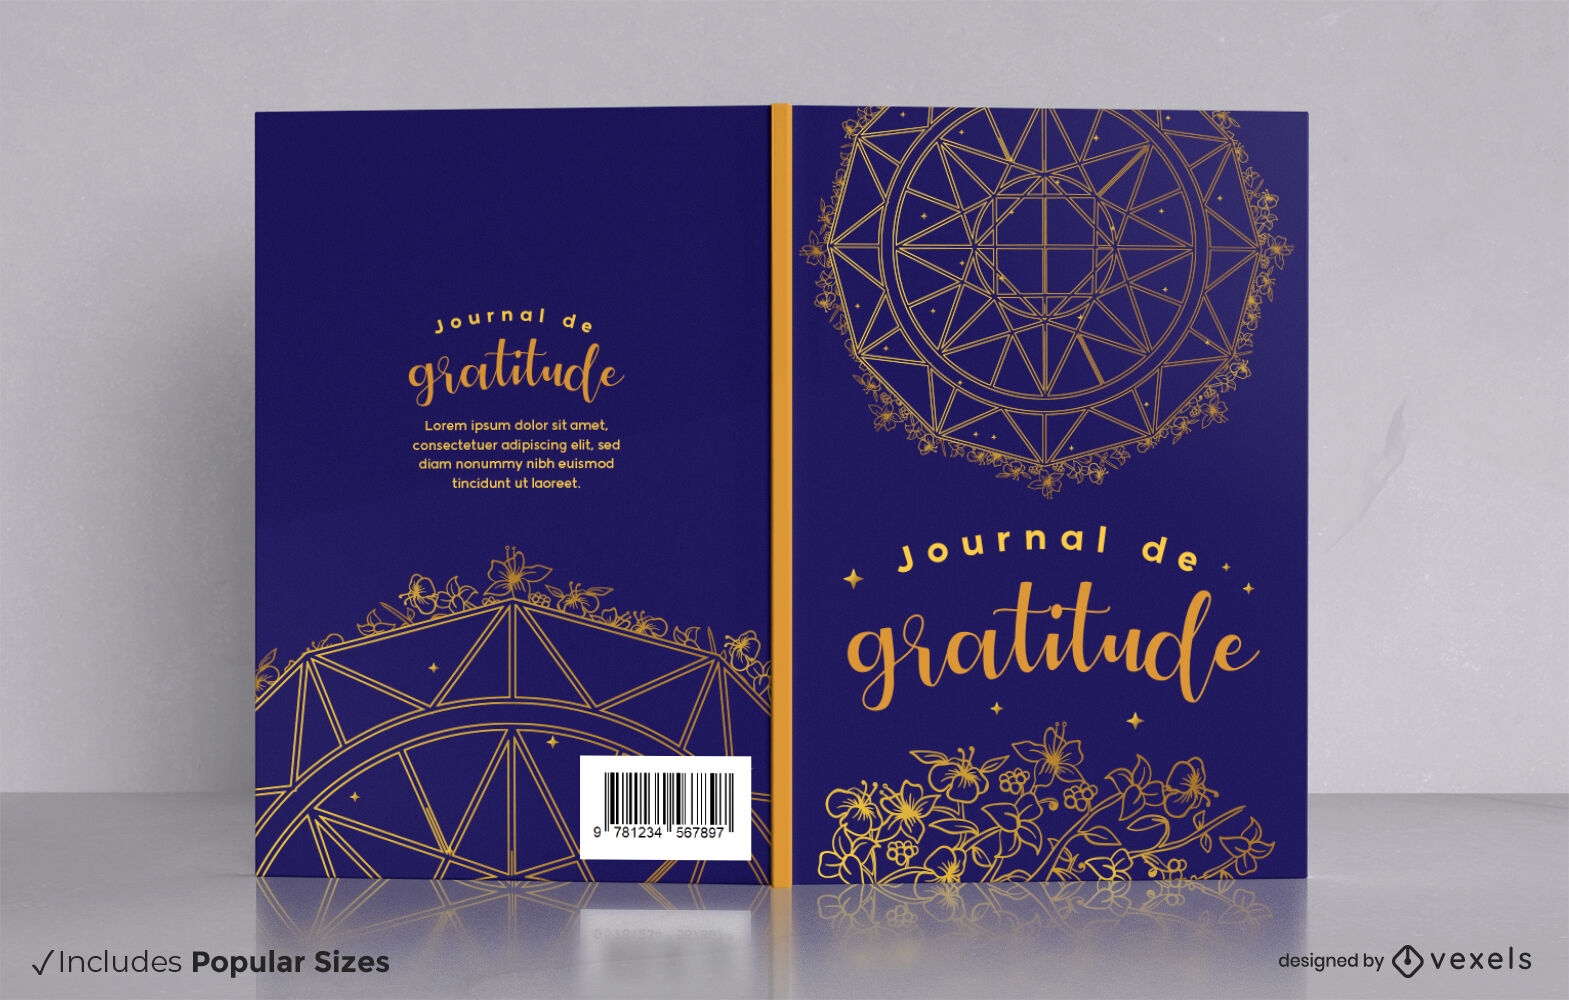 Gratitude journal golden book cover design